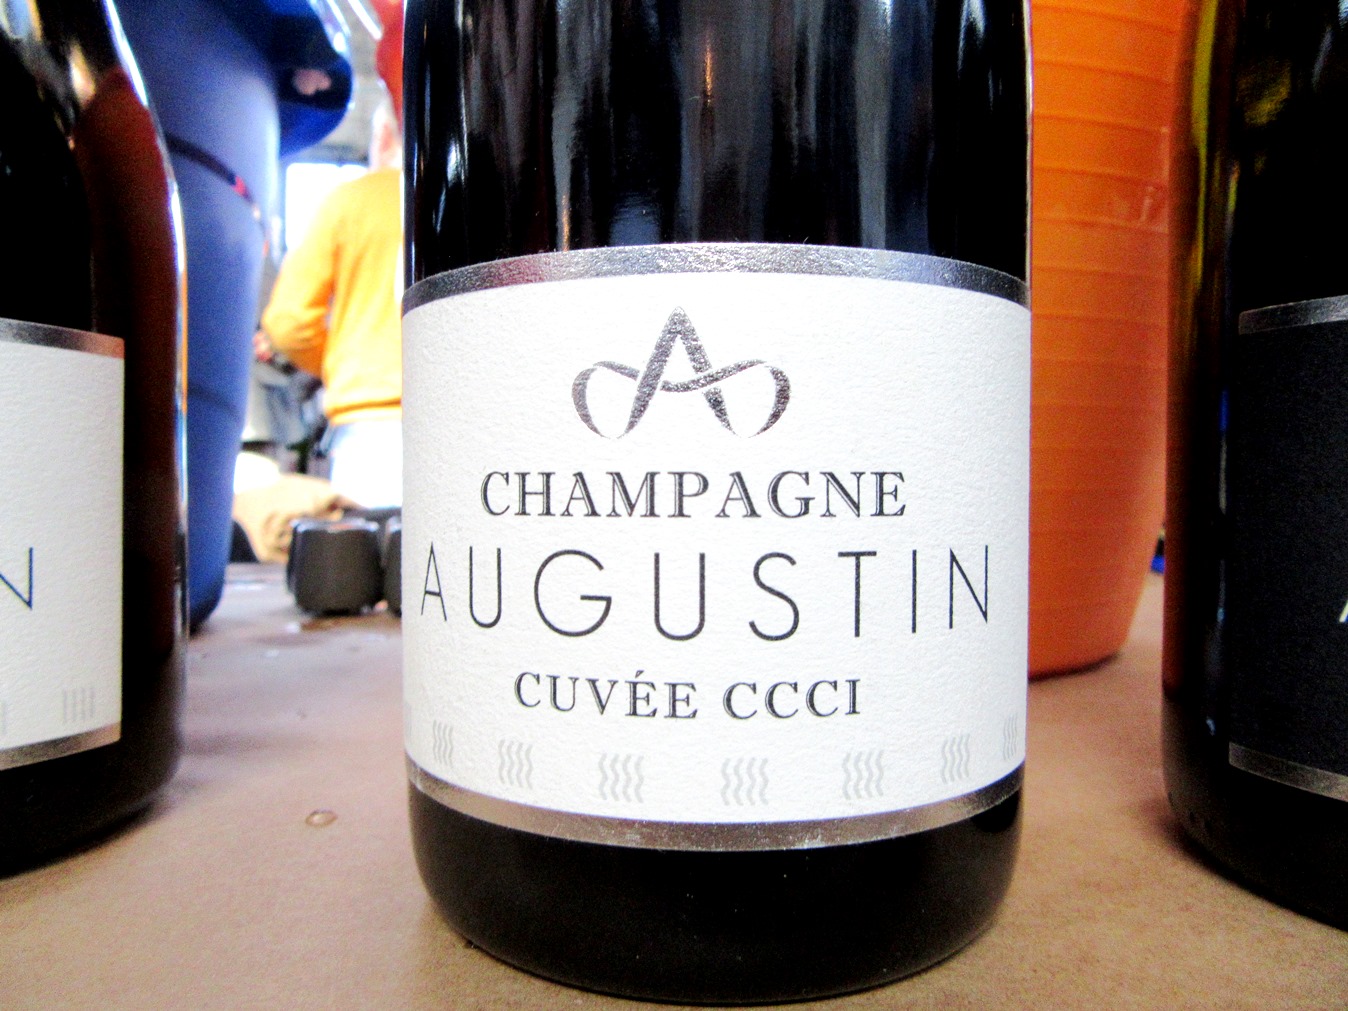 Augustin, Cuvée CCCI Le Feu (Fire) Premier Cru Extra Brut, Champagne, France